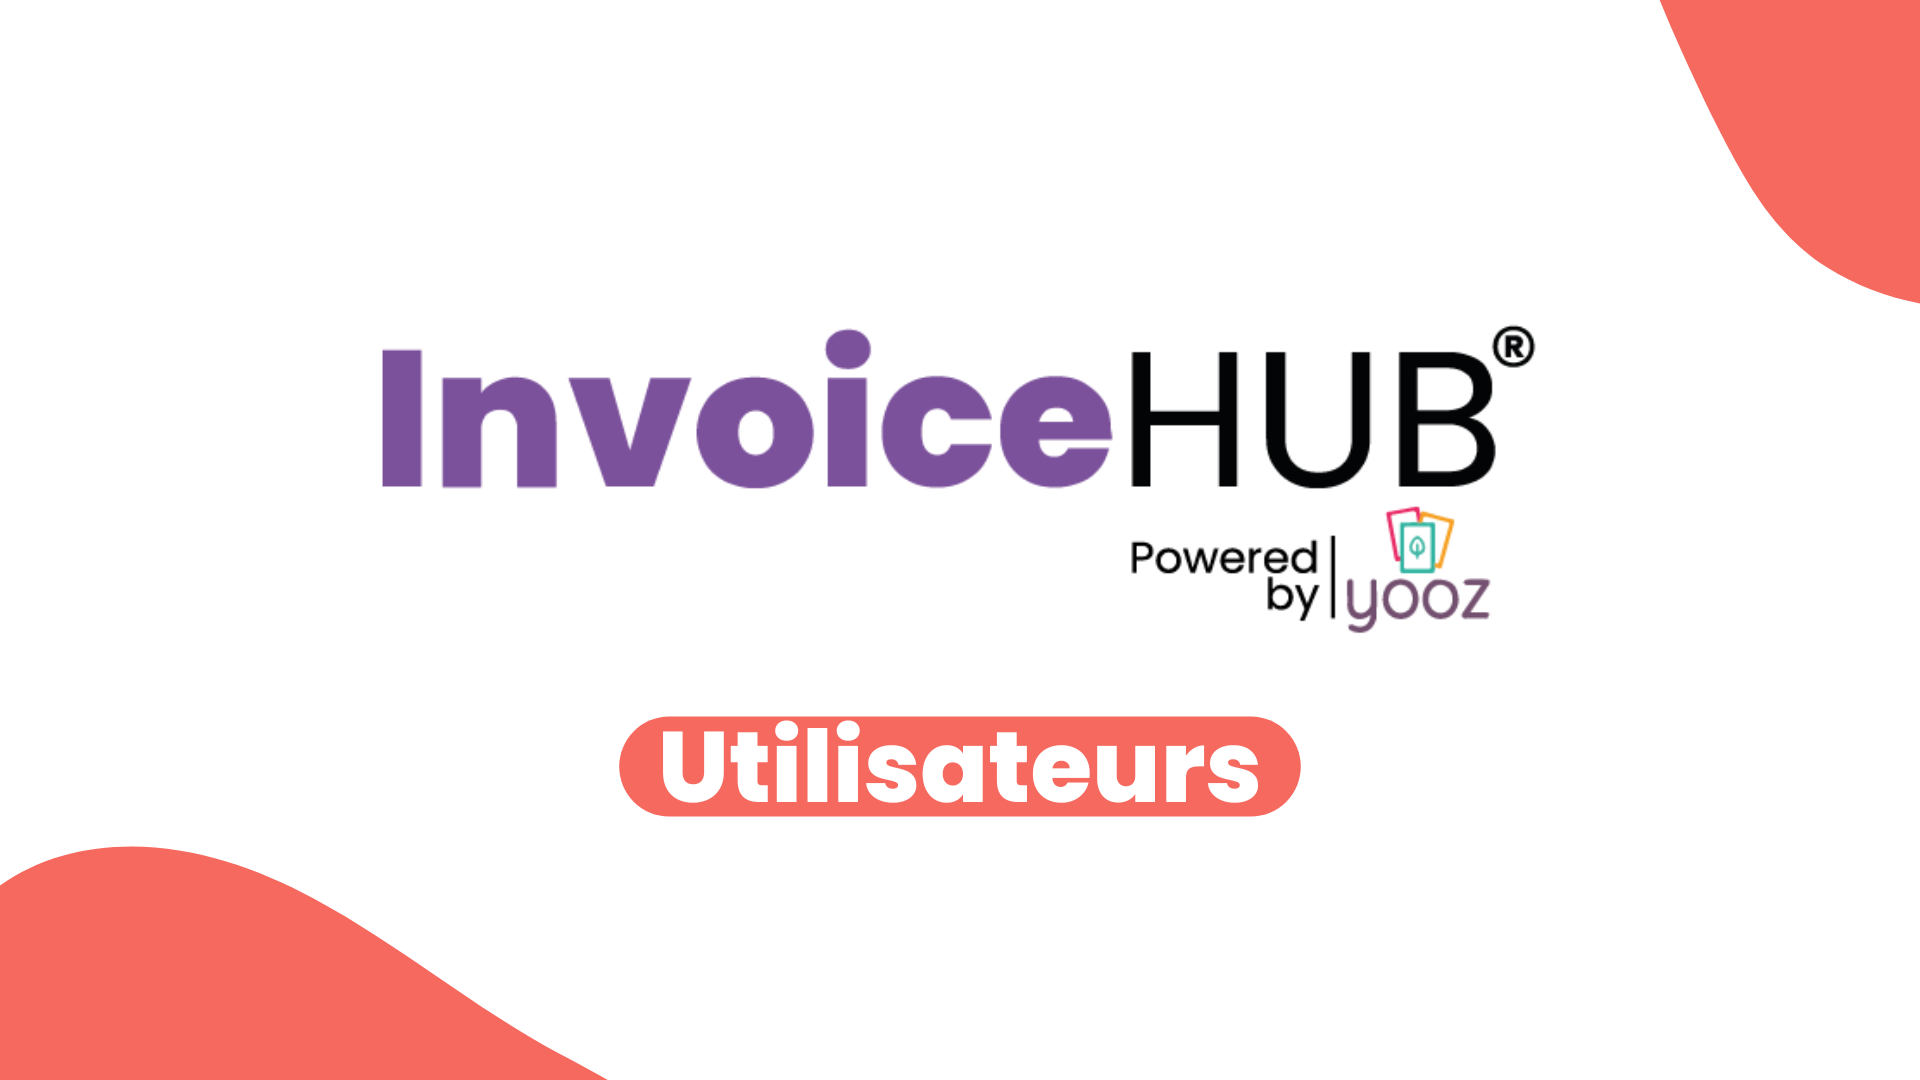 Formation InvoiceHUB by Yooz - Utilisateurs